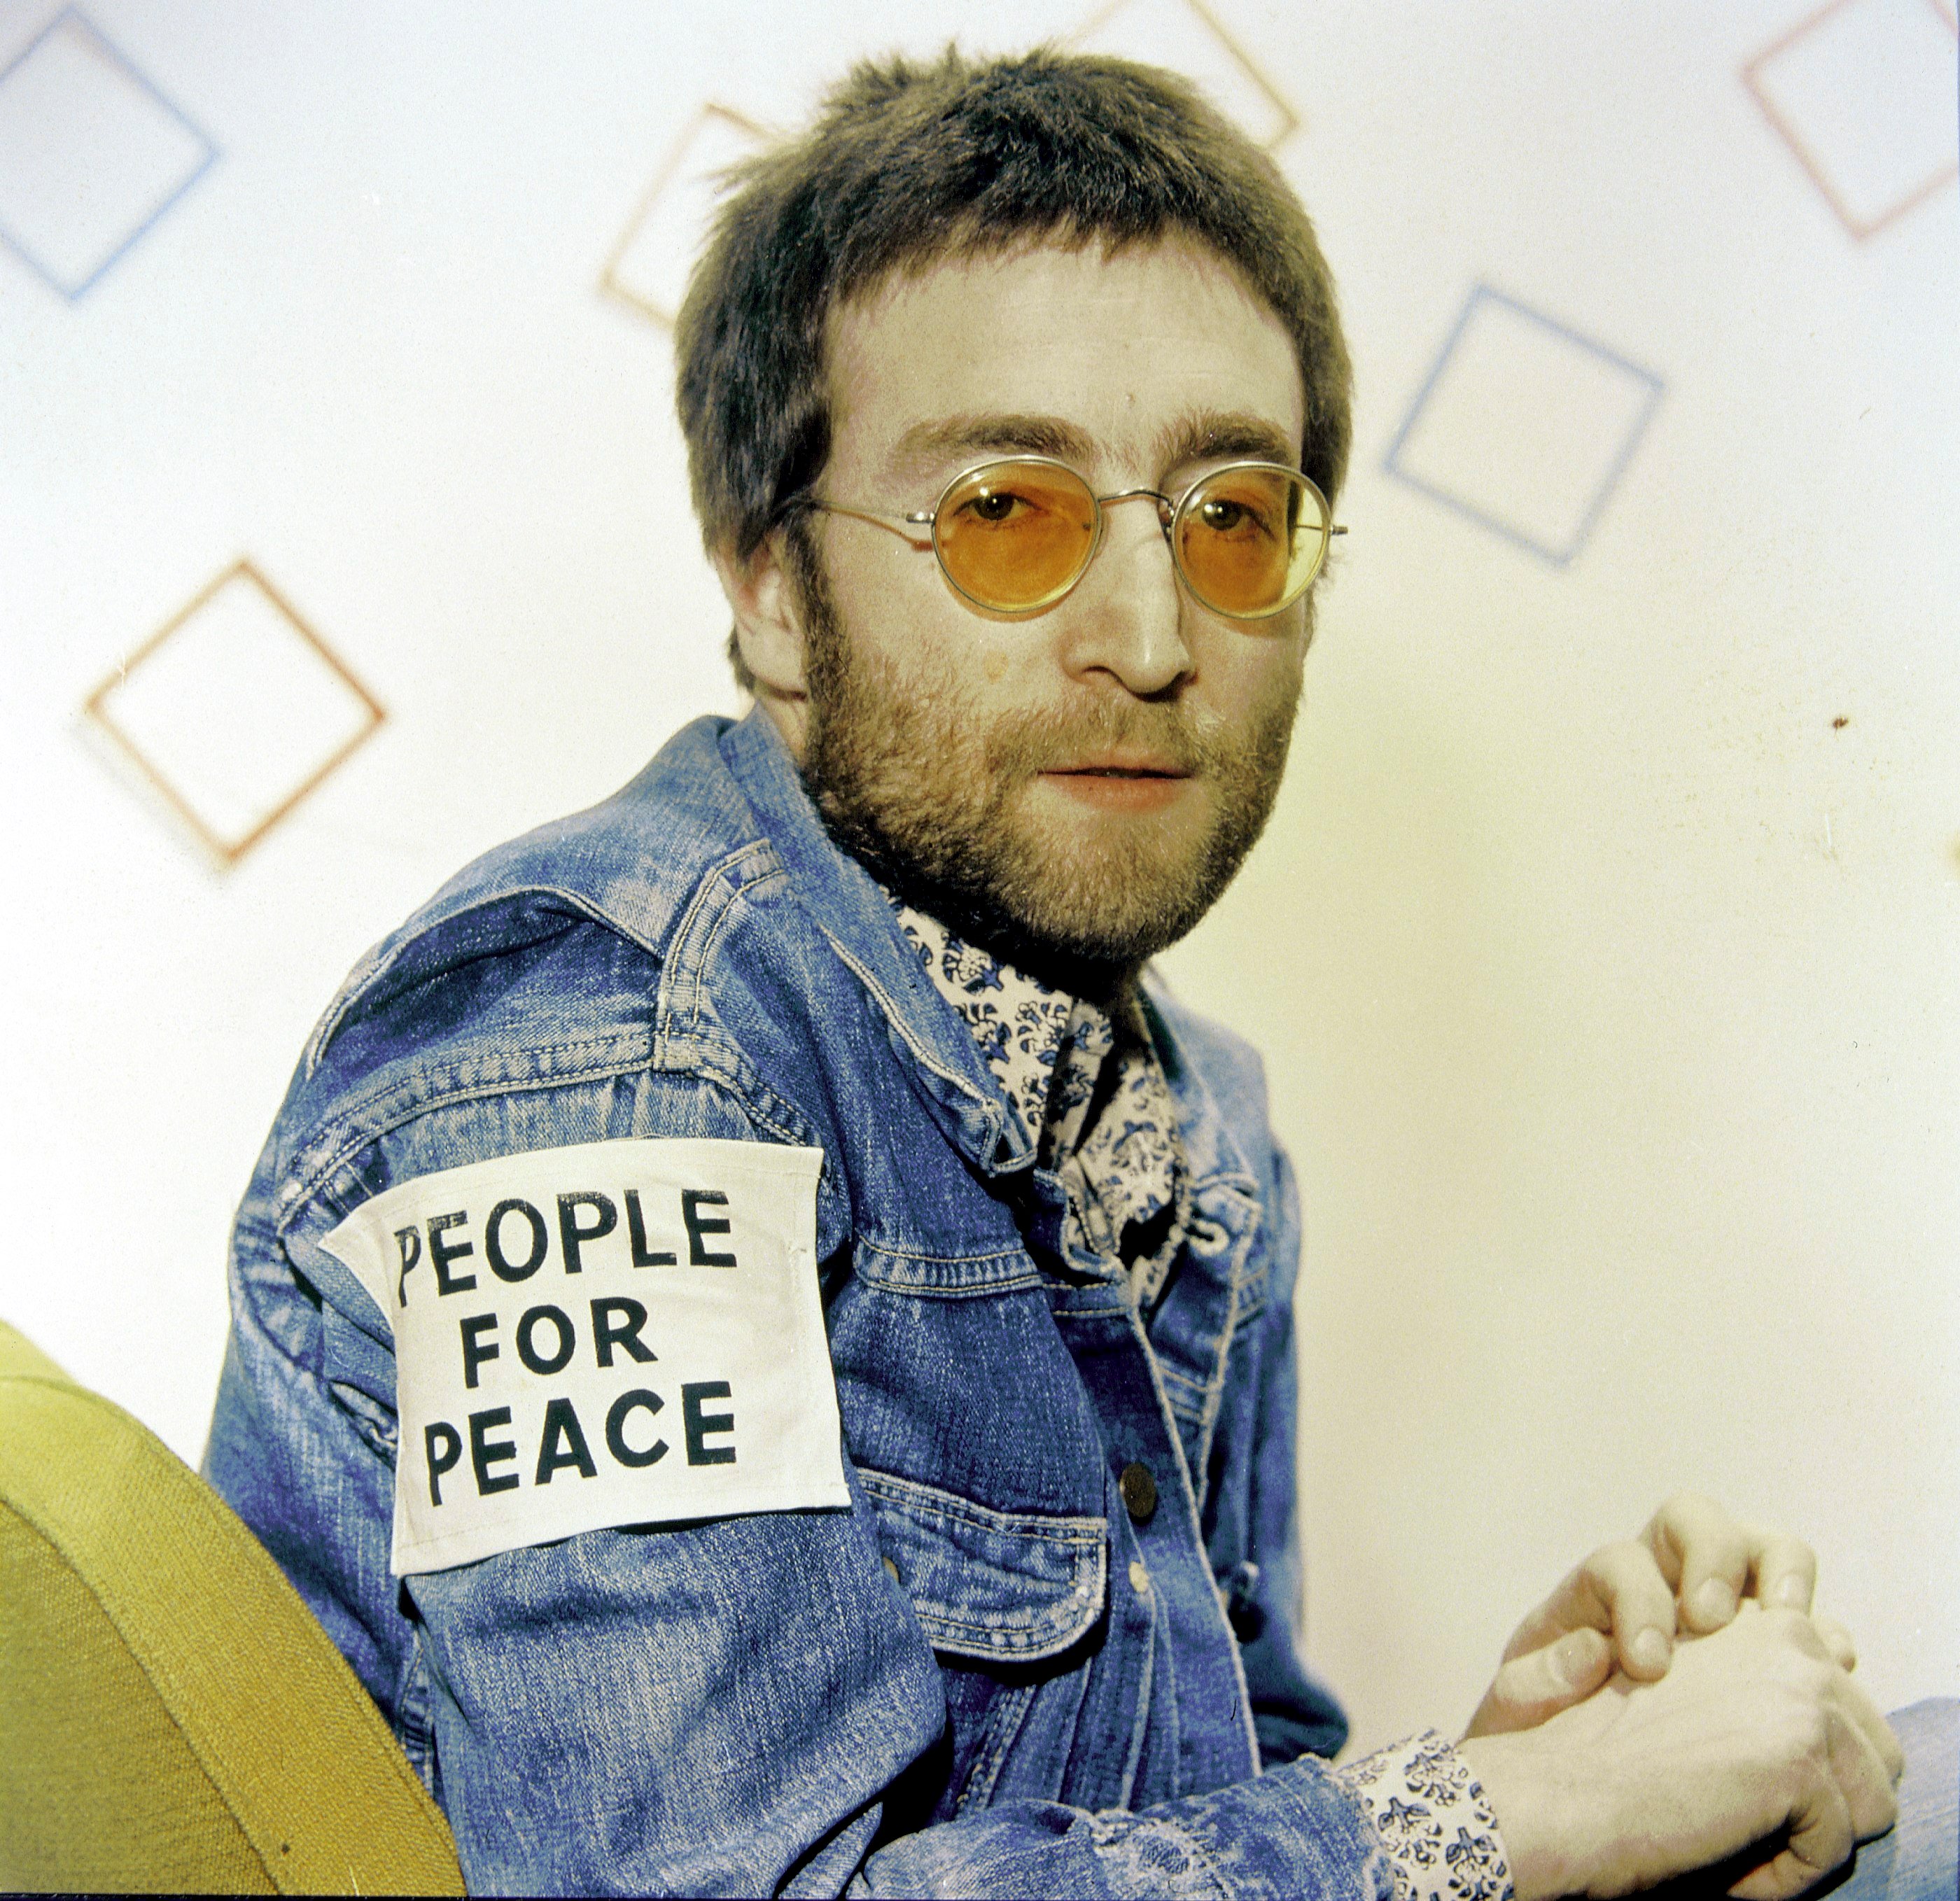 John Lennon wearing yellow glasses during The Beatles' "Let It Be" era